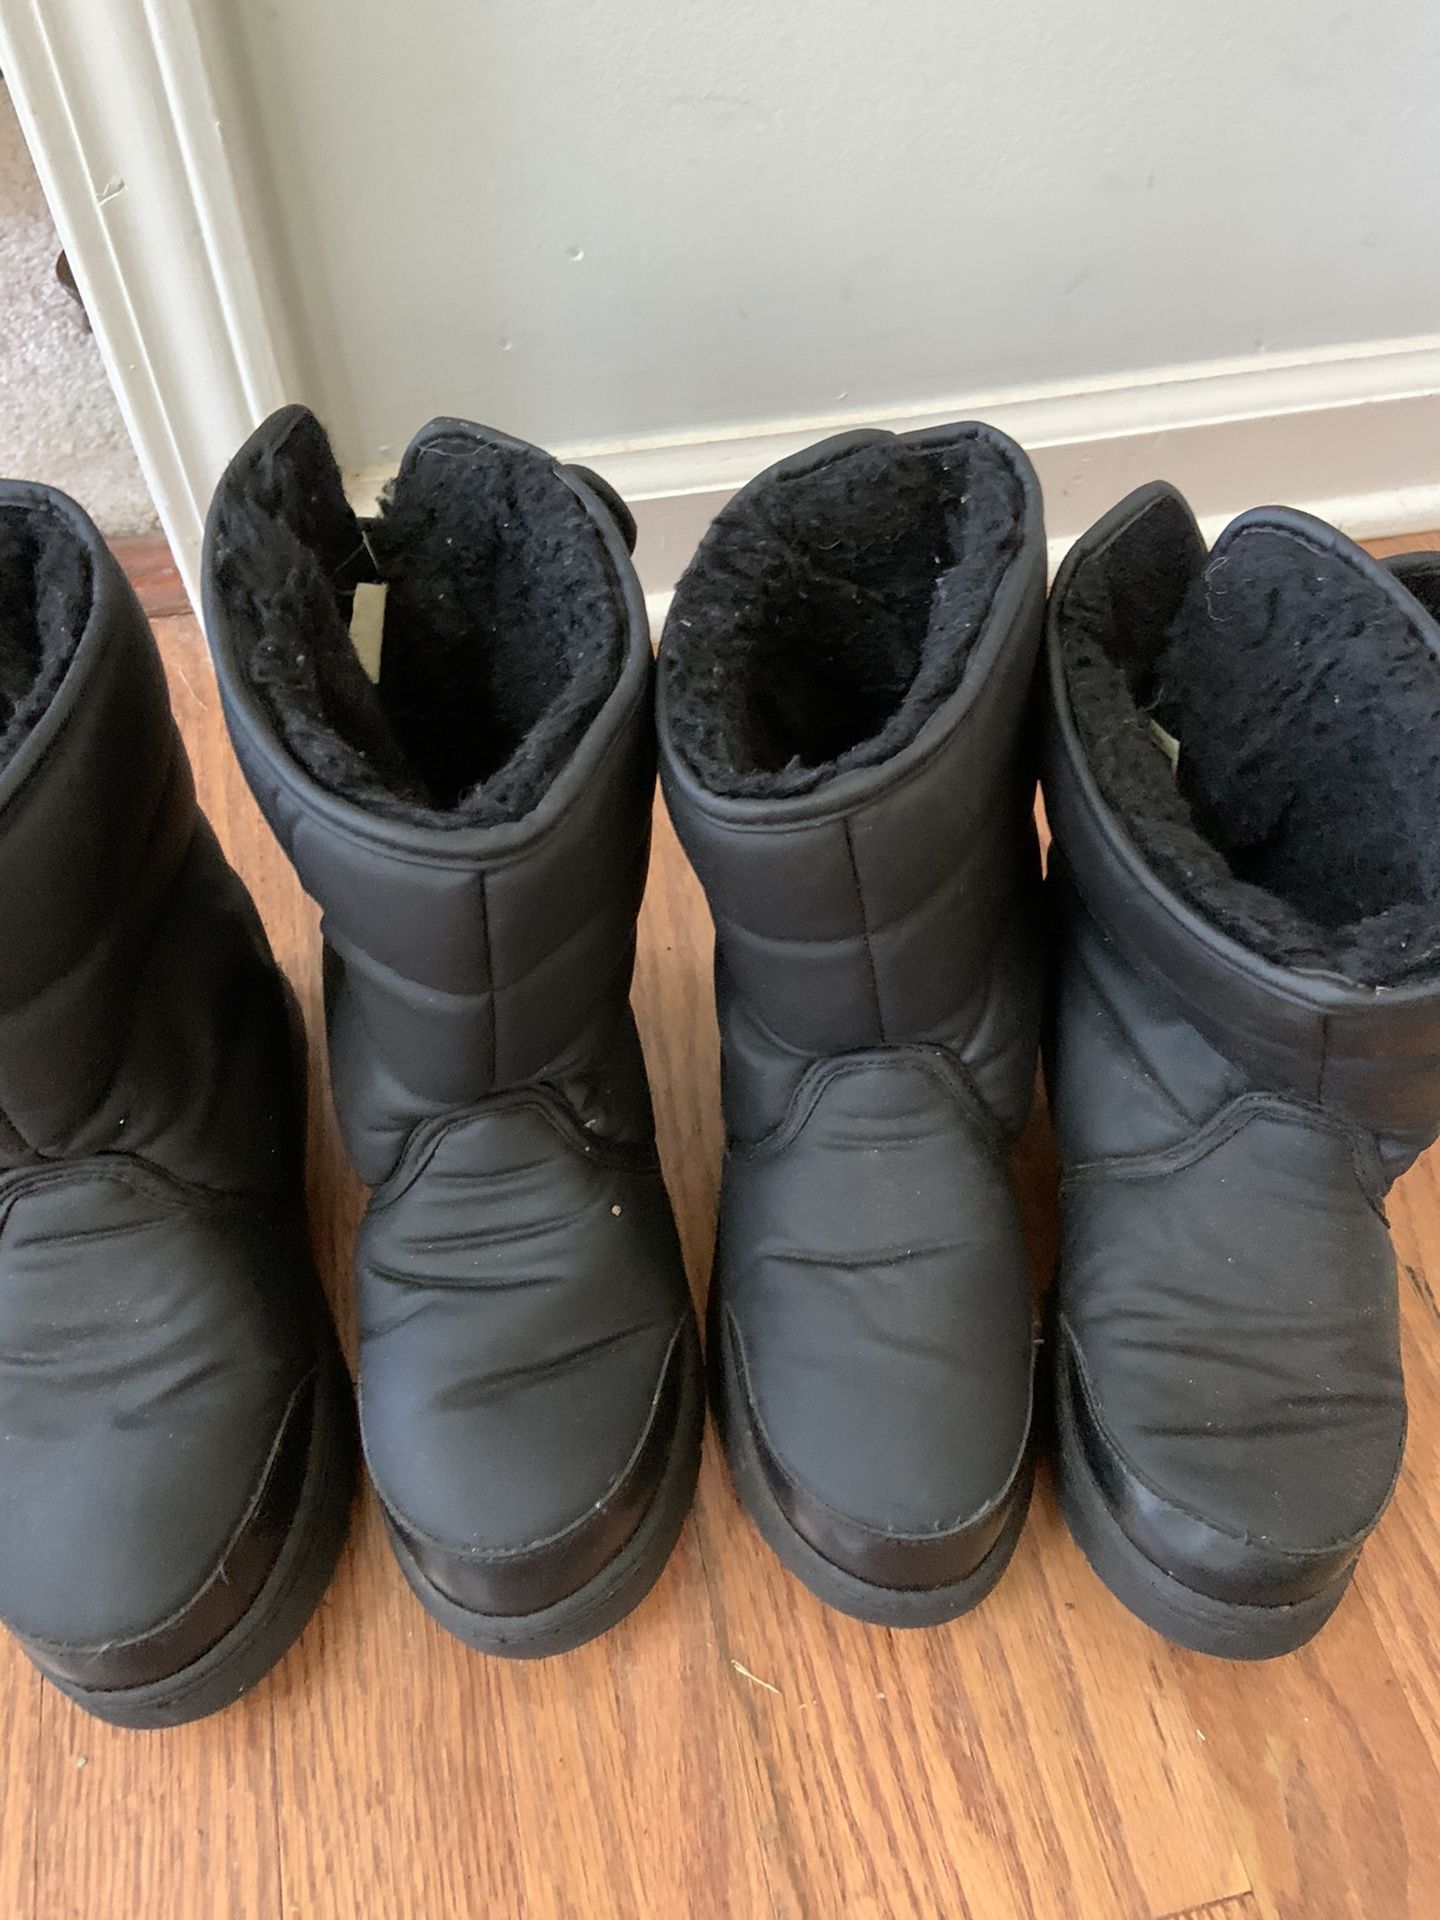 Snow Boots Kids Sz 13 (pink) & 2 (both Black)